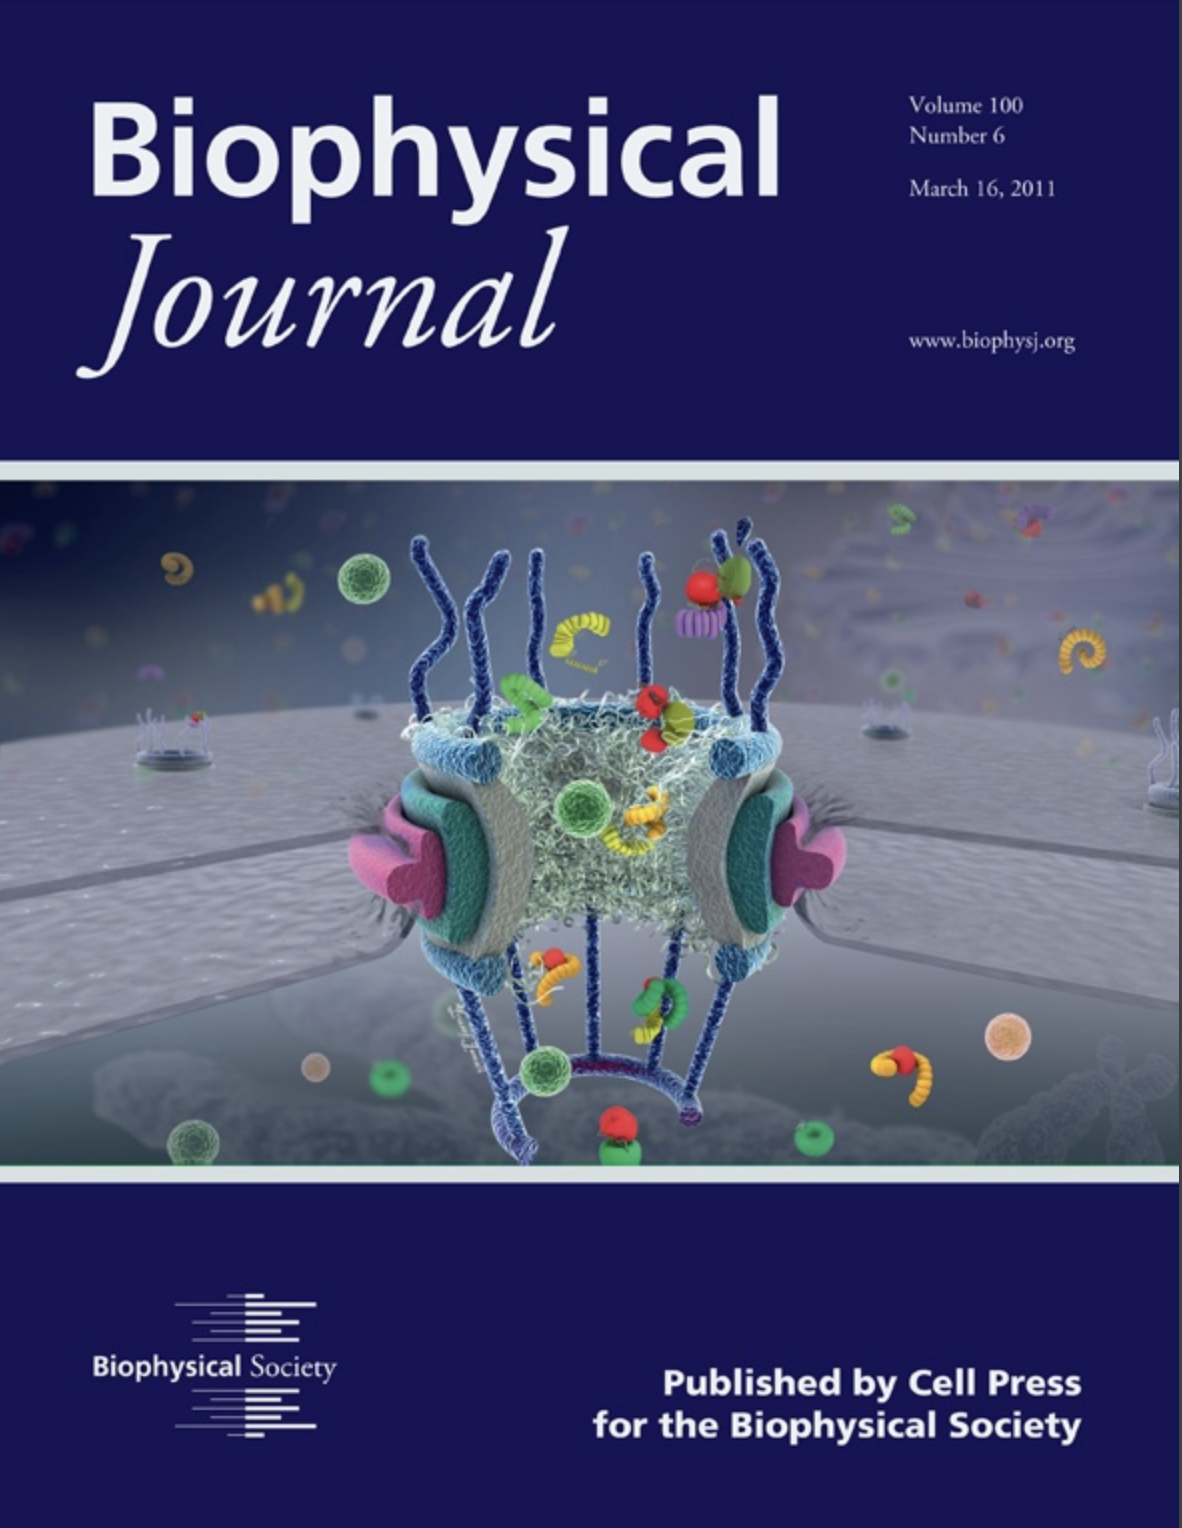 https://biomechanics.berkeley.edu/wp-content/uploads/2019/04/BJ_Cover_NPC2011.png